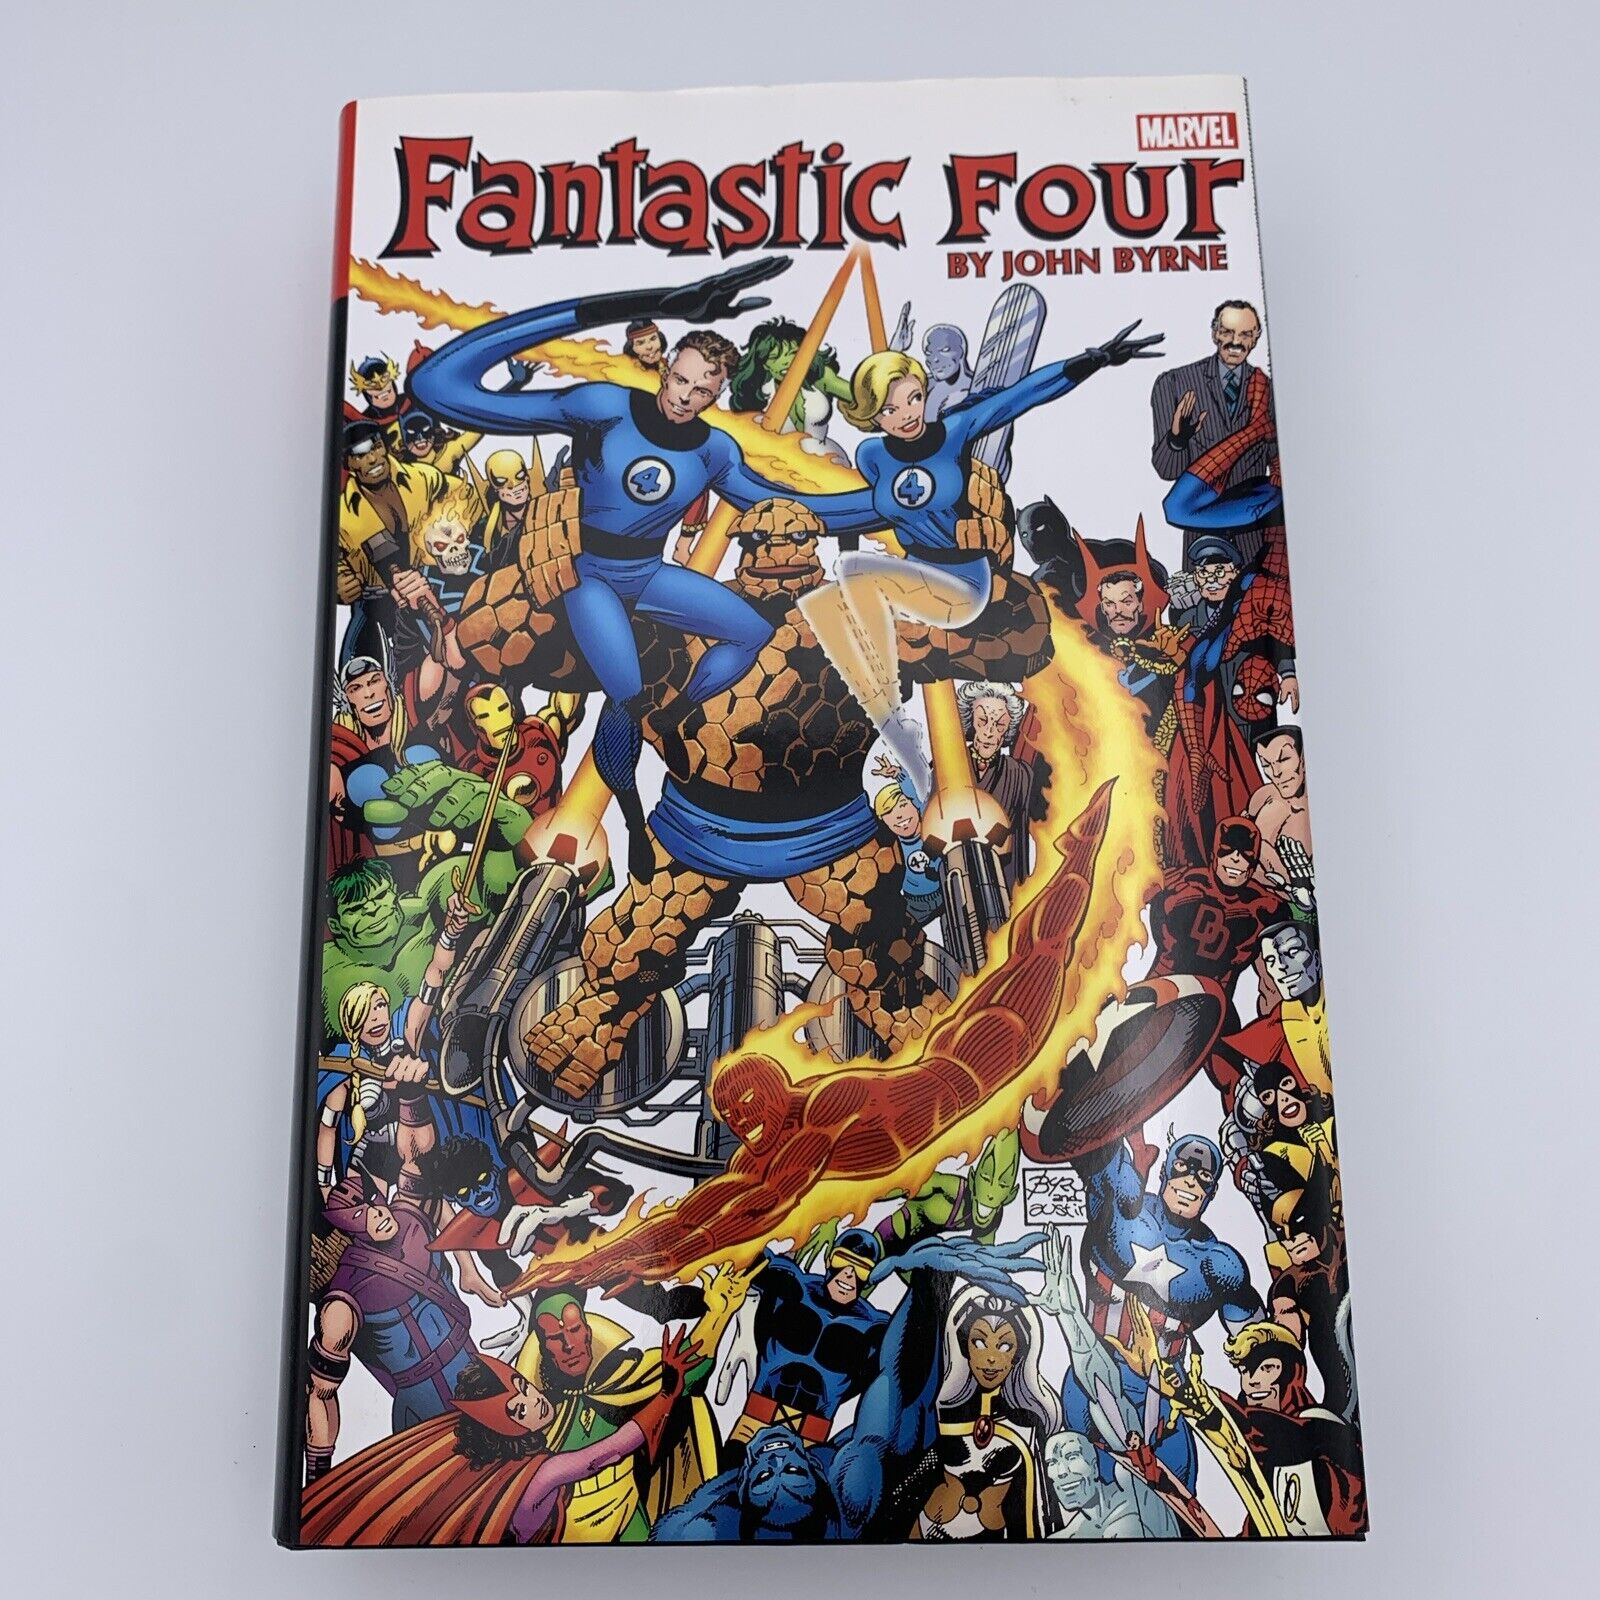 Fantastic Four by John Byrne Omnibus #1 (Marvel Comics, Hardcover, 2018)